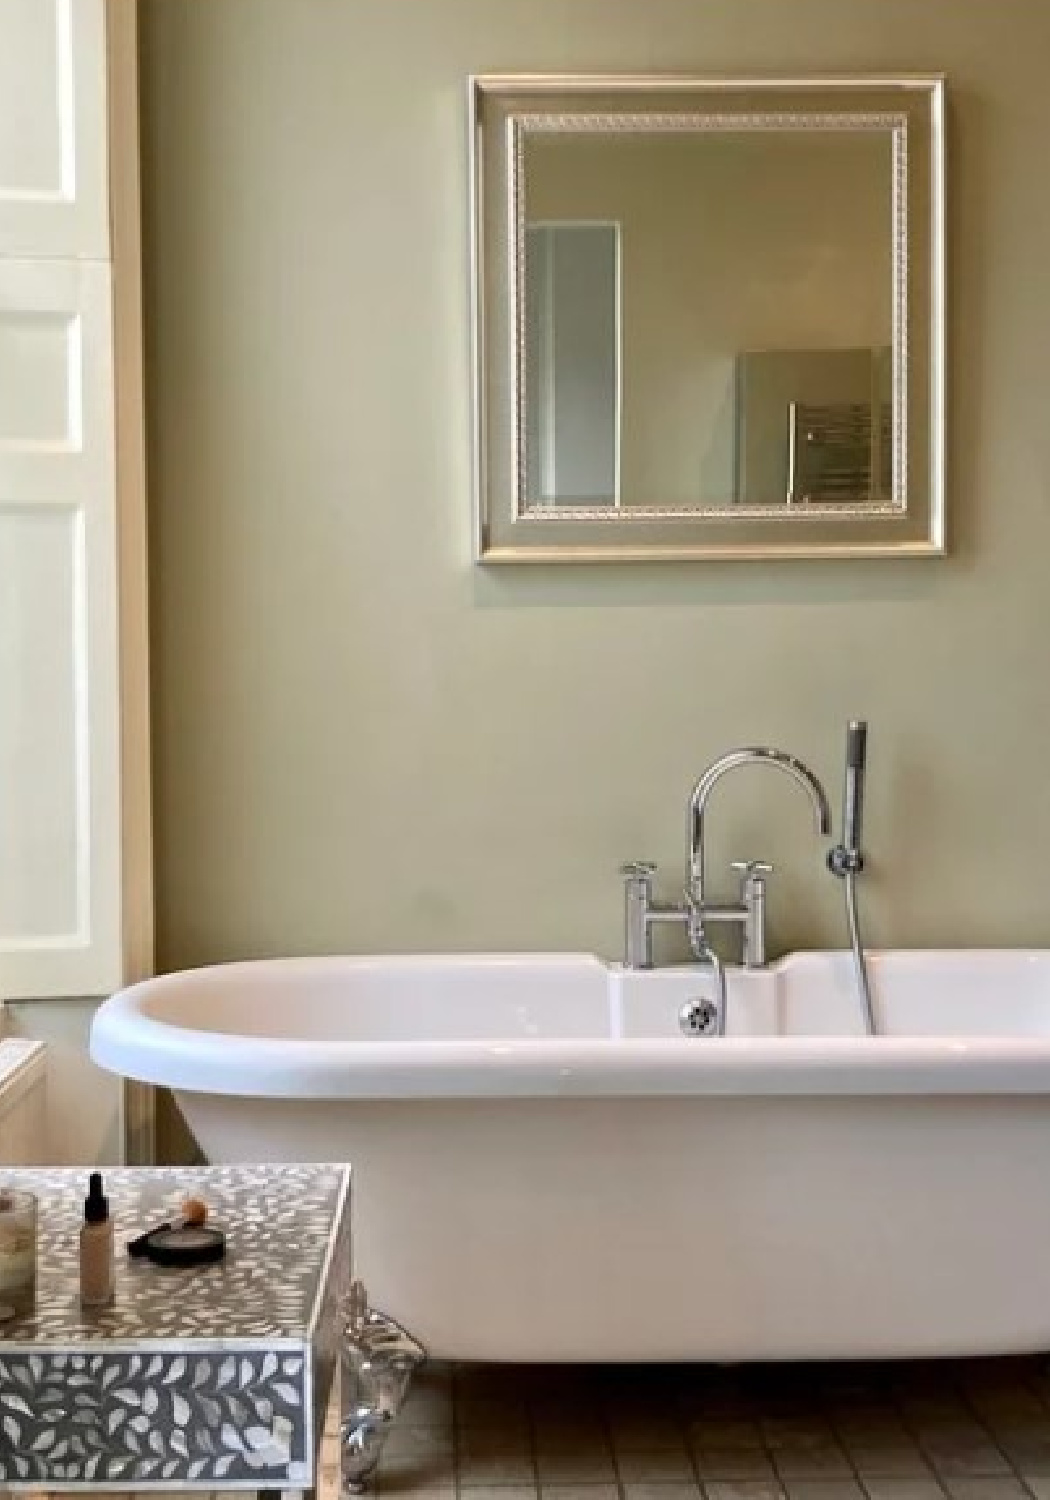 Ball Green paint color (Farrow & Ball) in a classic bathroom with clawfoot tub - Farrow & Ball. #ballgreen